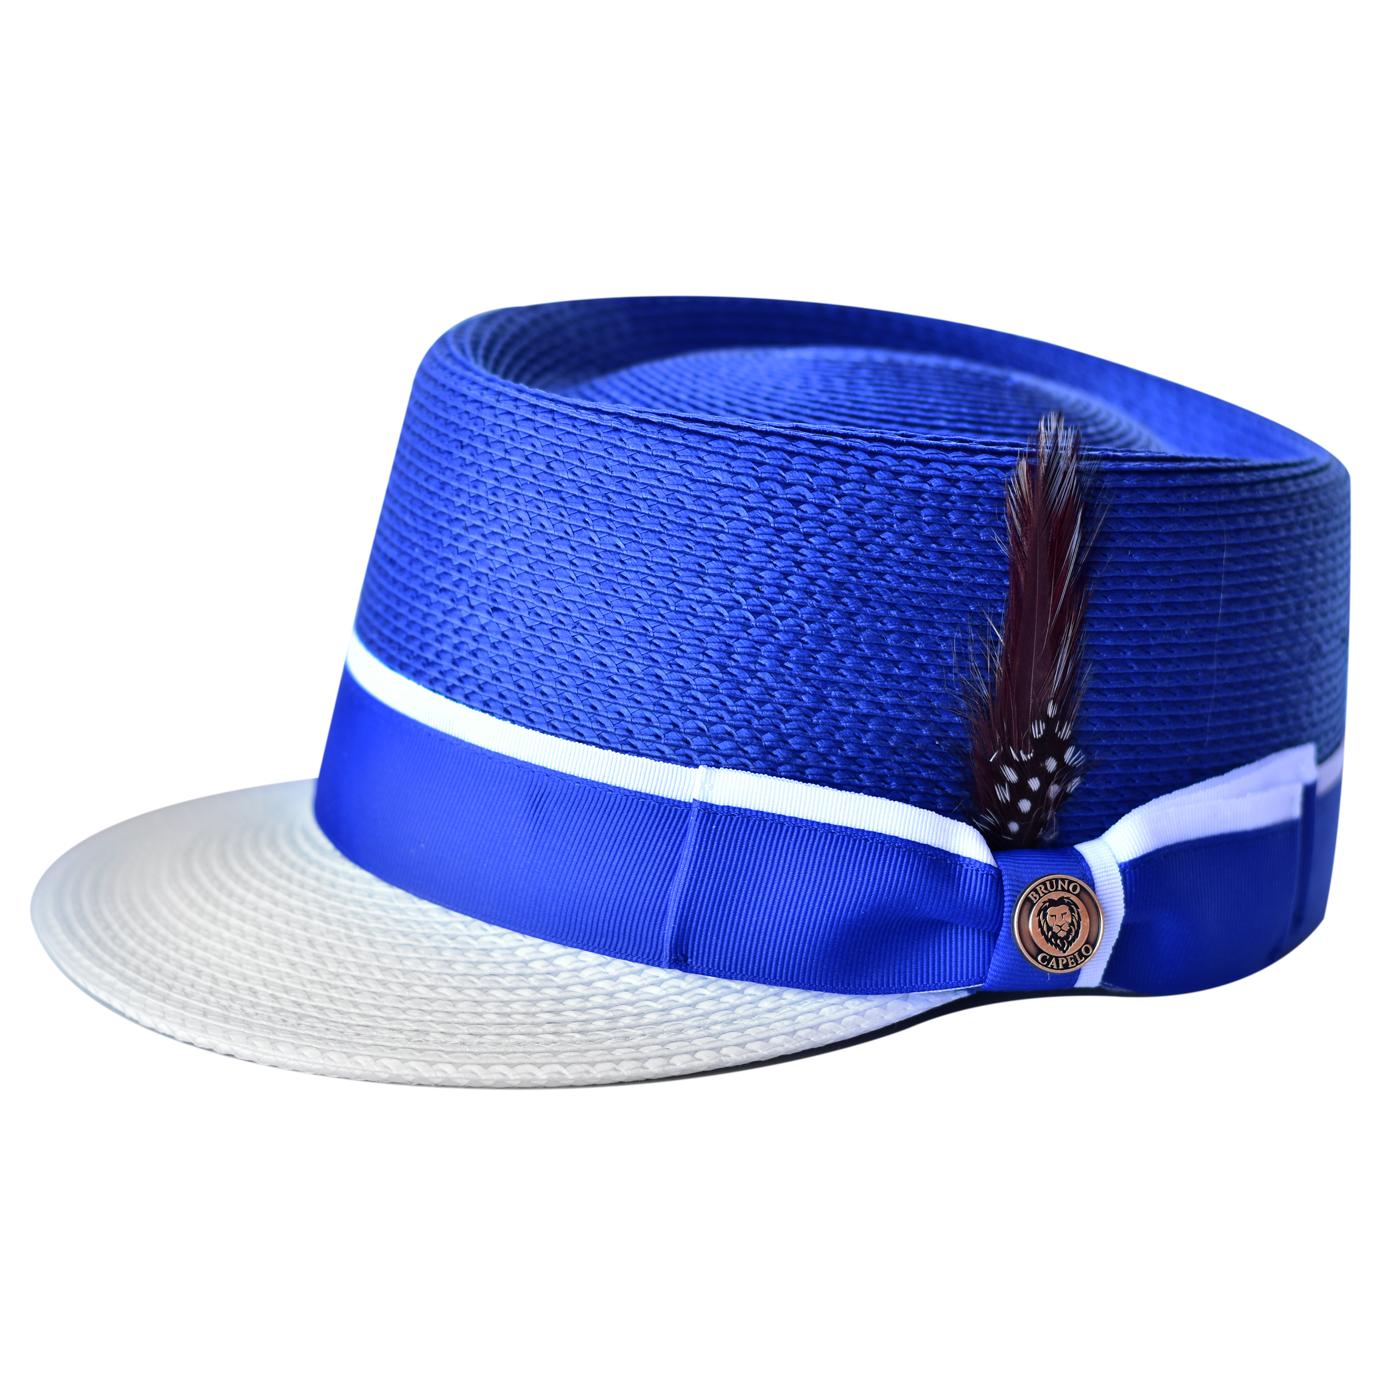 Blue - White Capelo Straw $49.90 :: Upscale Braided Hat Telescope / LG-222 Baseball Bruno Menswear Royal